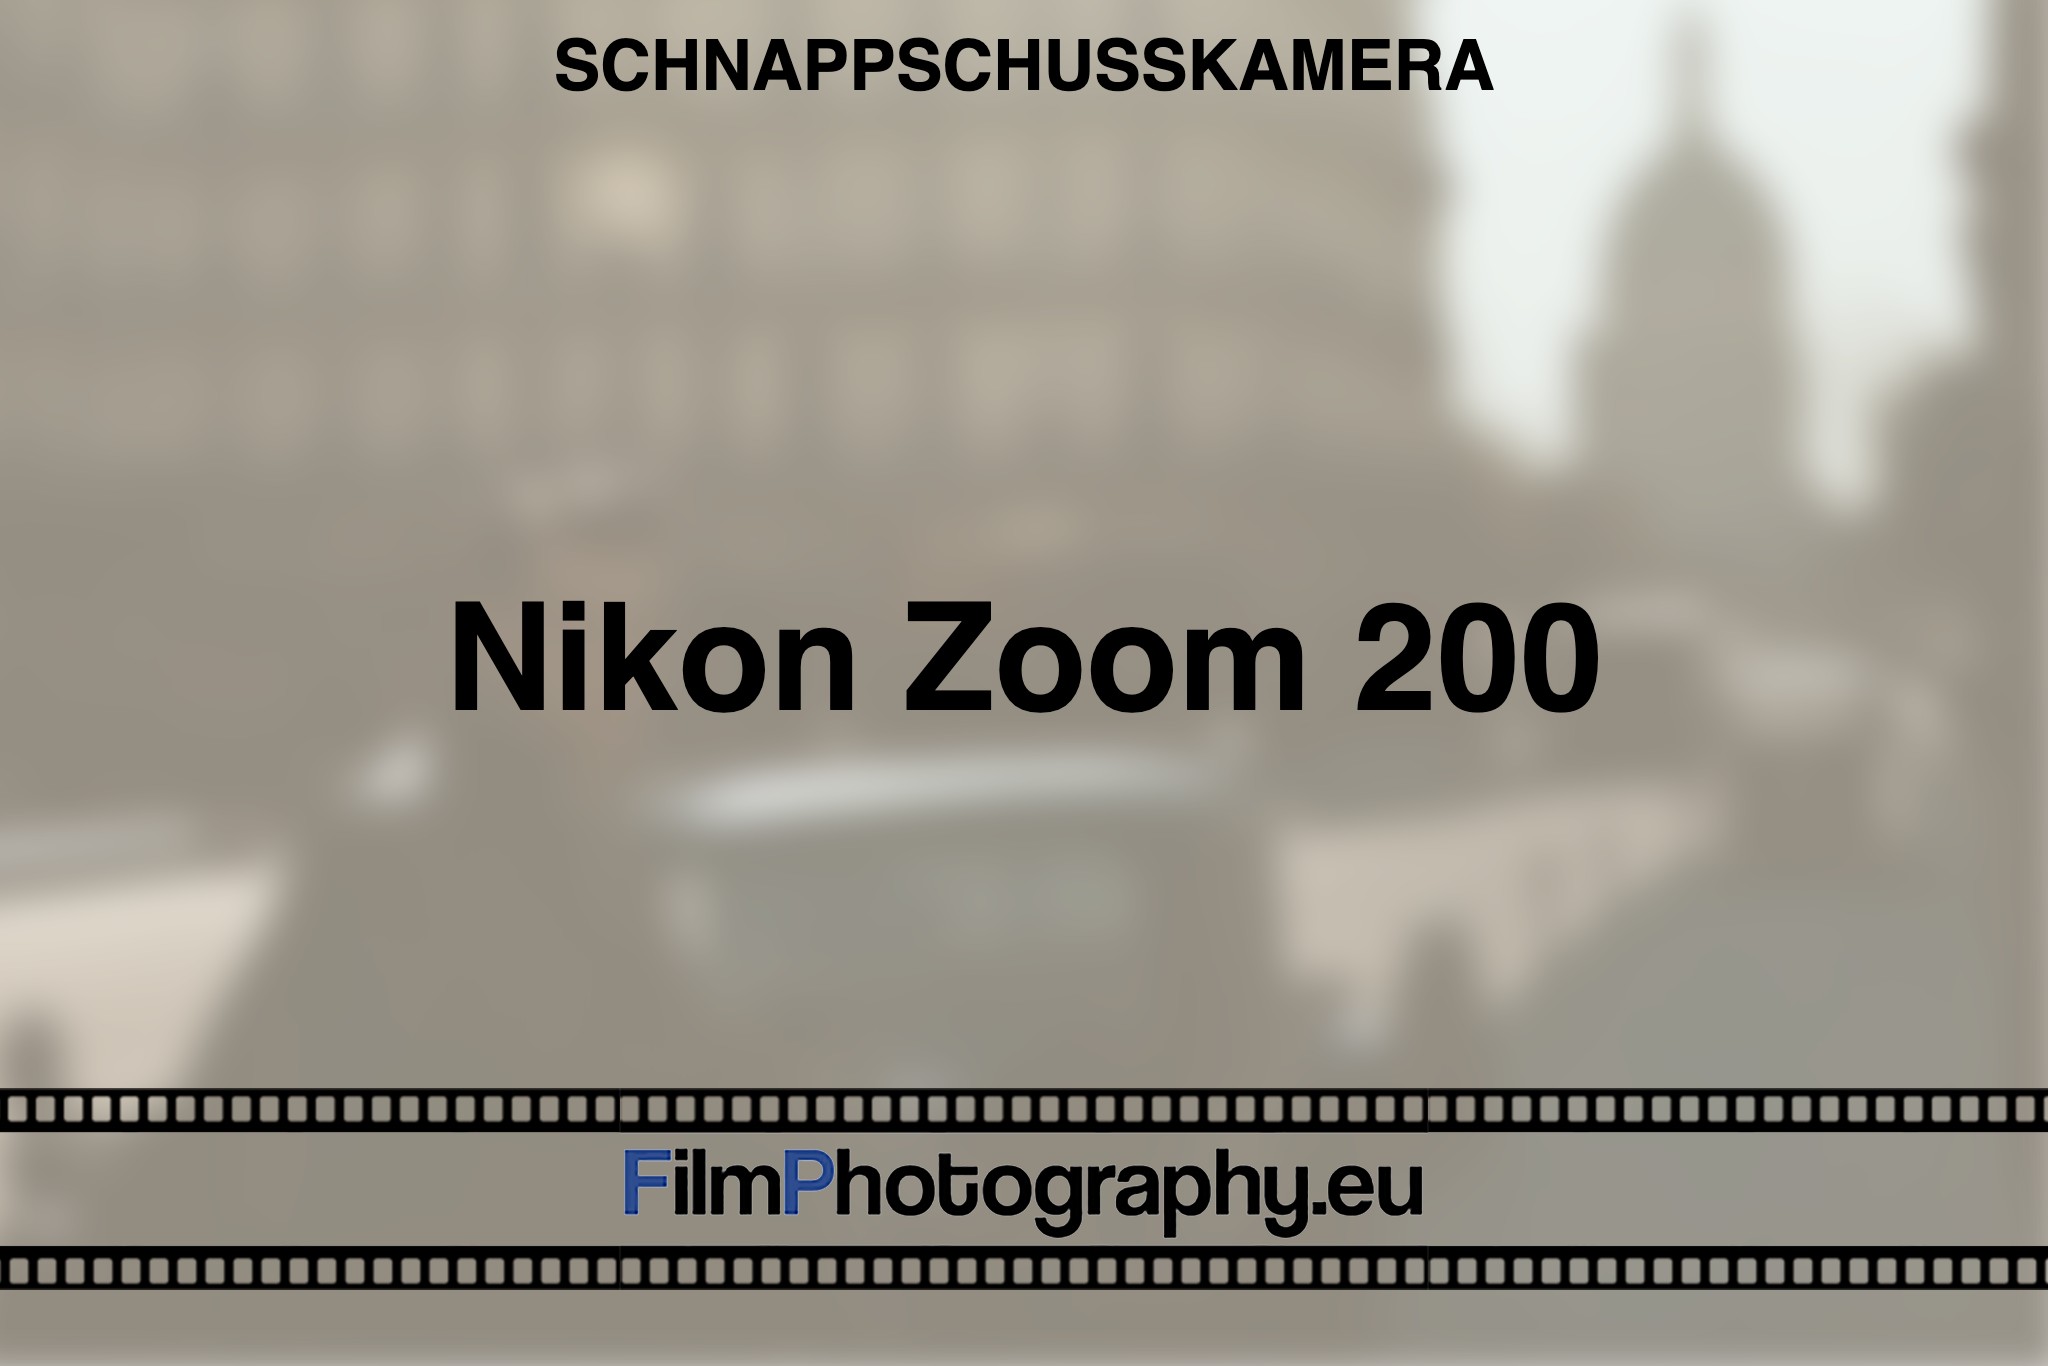 nikon-zoom-200-schnappschusskamera-bnv